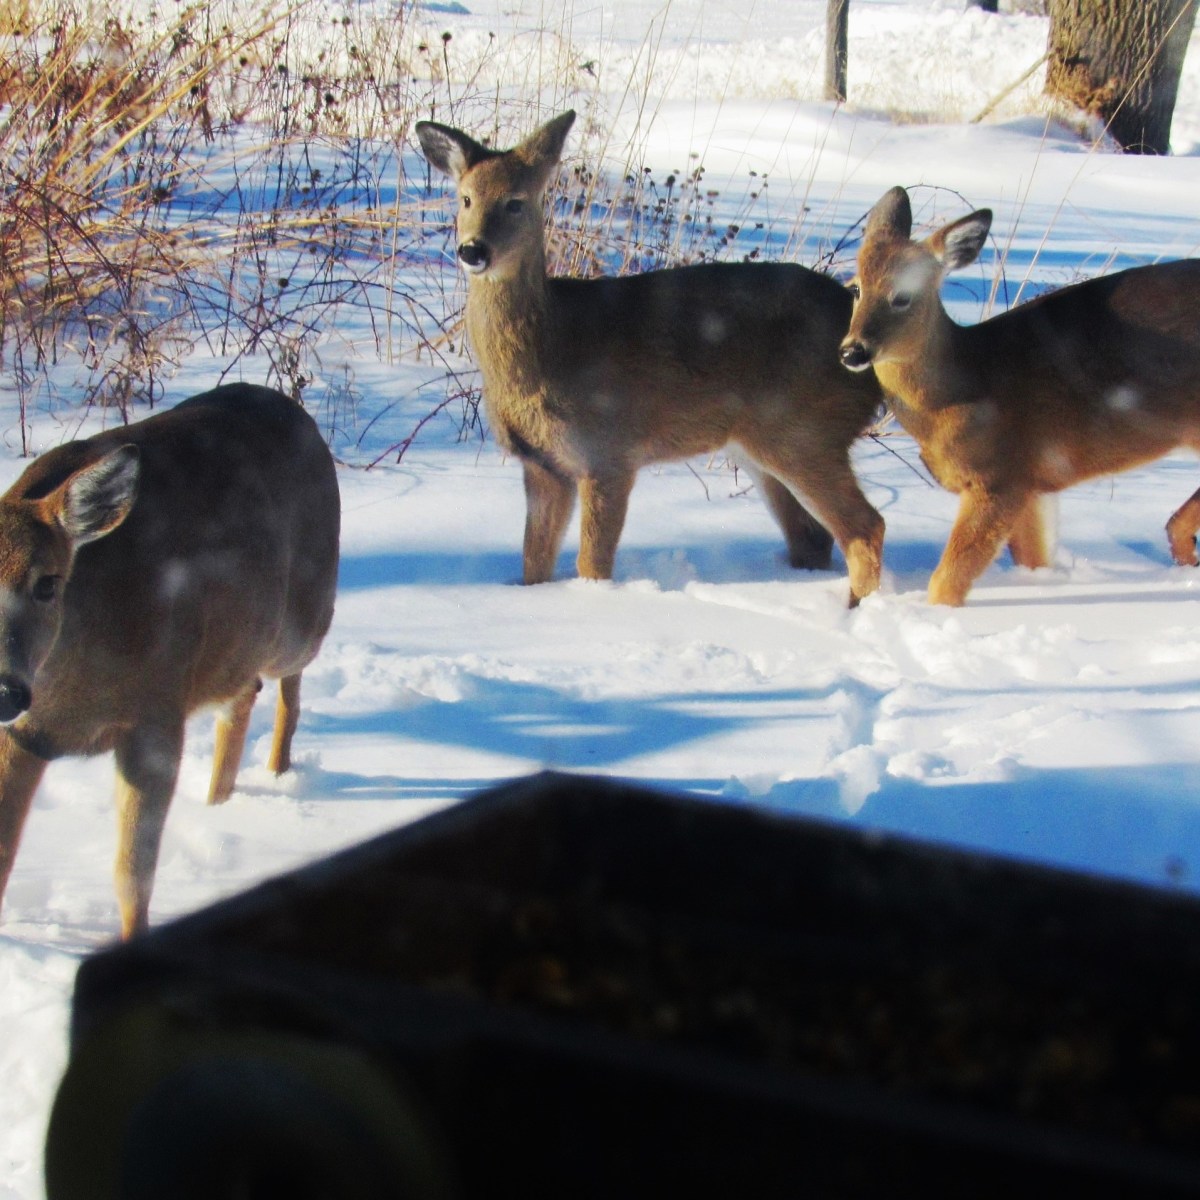 Three deer in deep snow approaching a window bird feeder